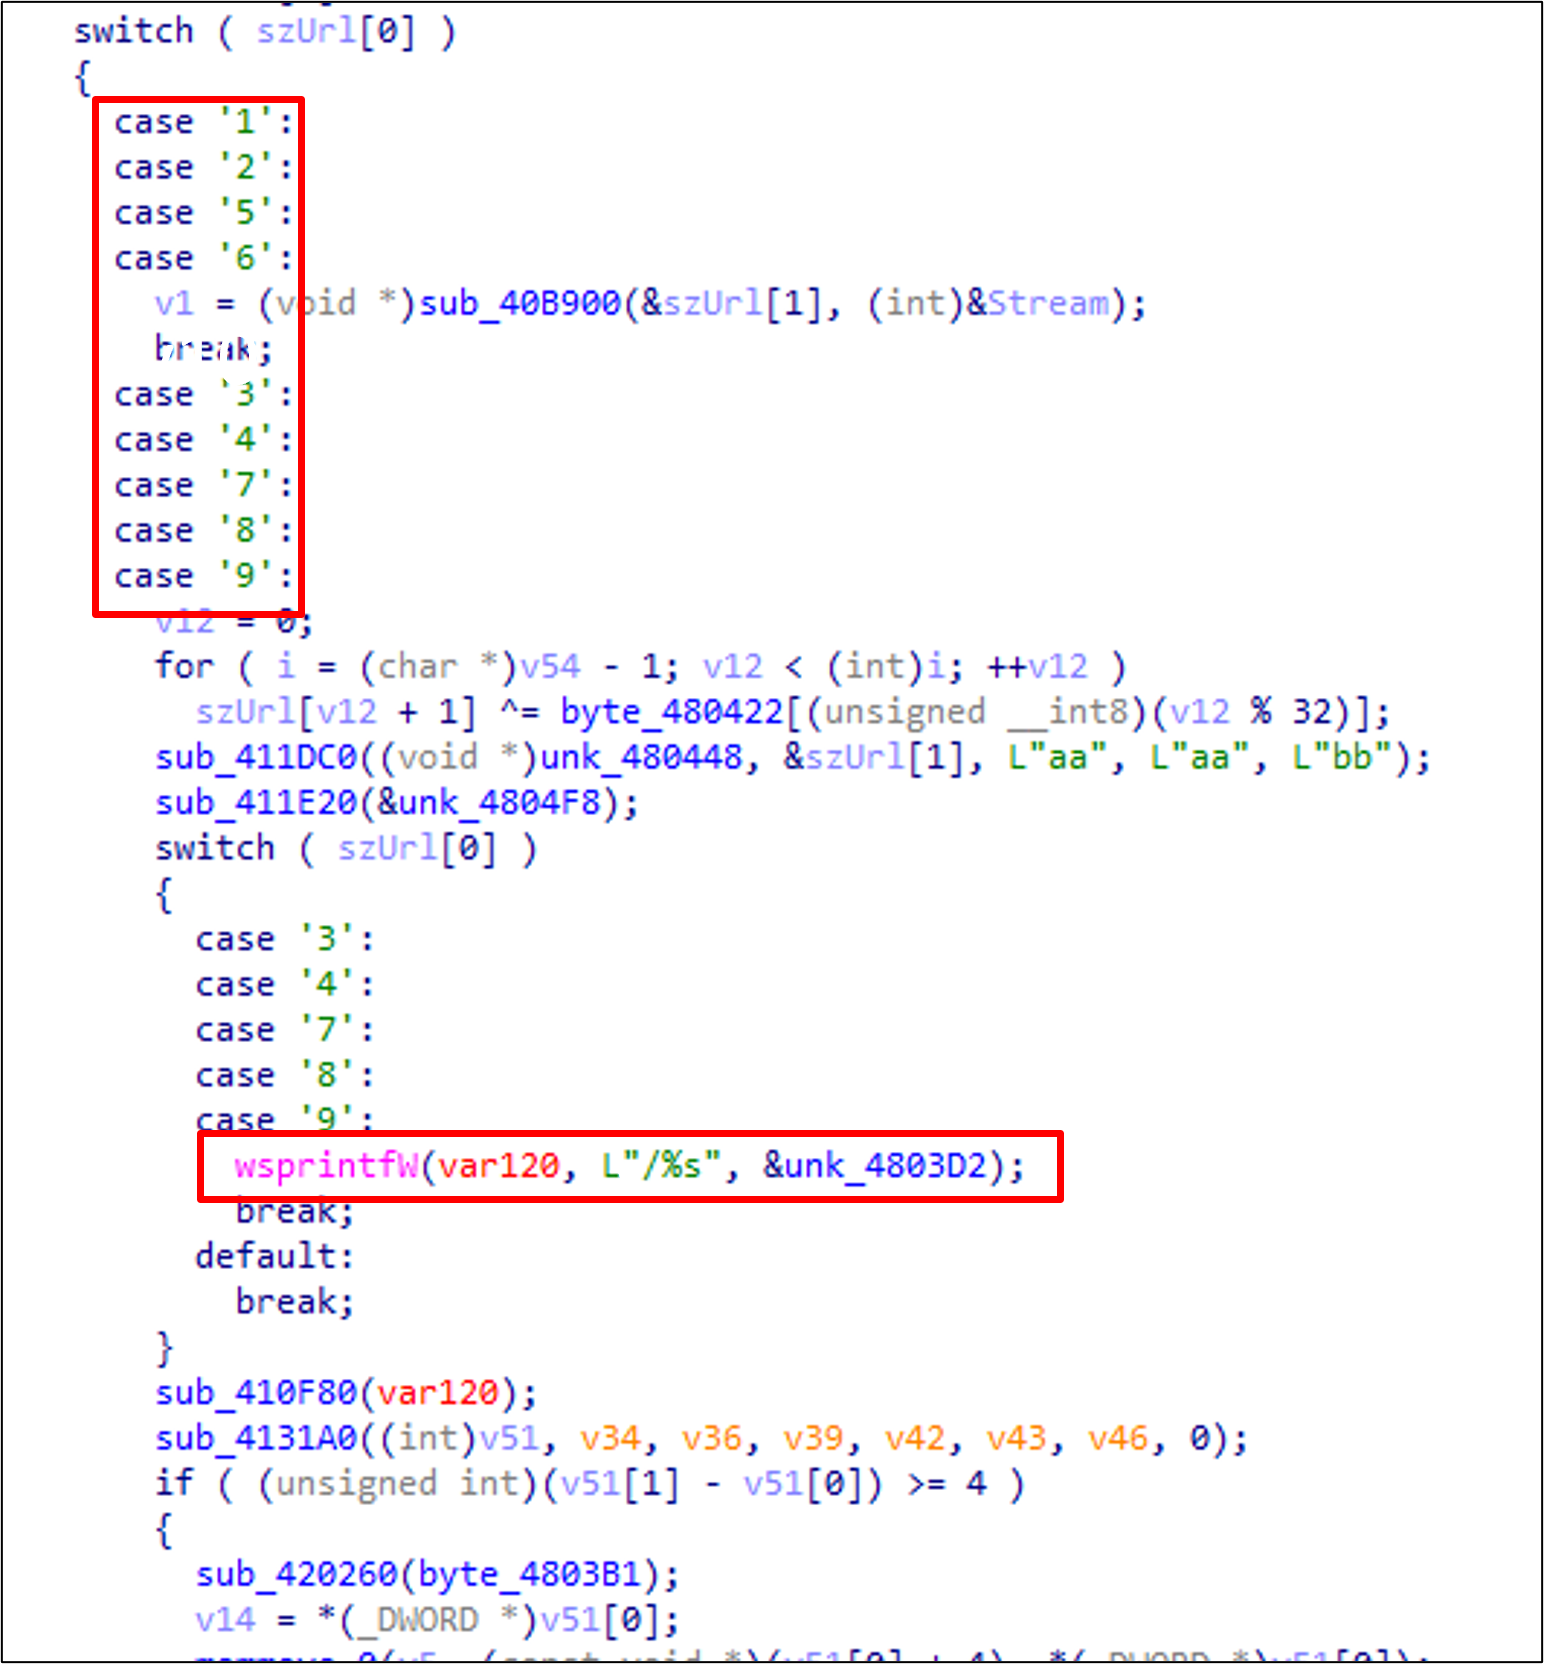 Analysis of ROKRAT Malware inside LNK Malicious file from North Korea